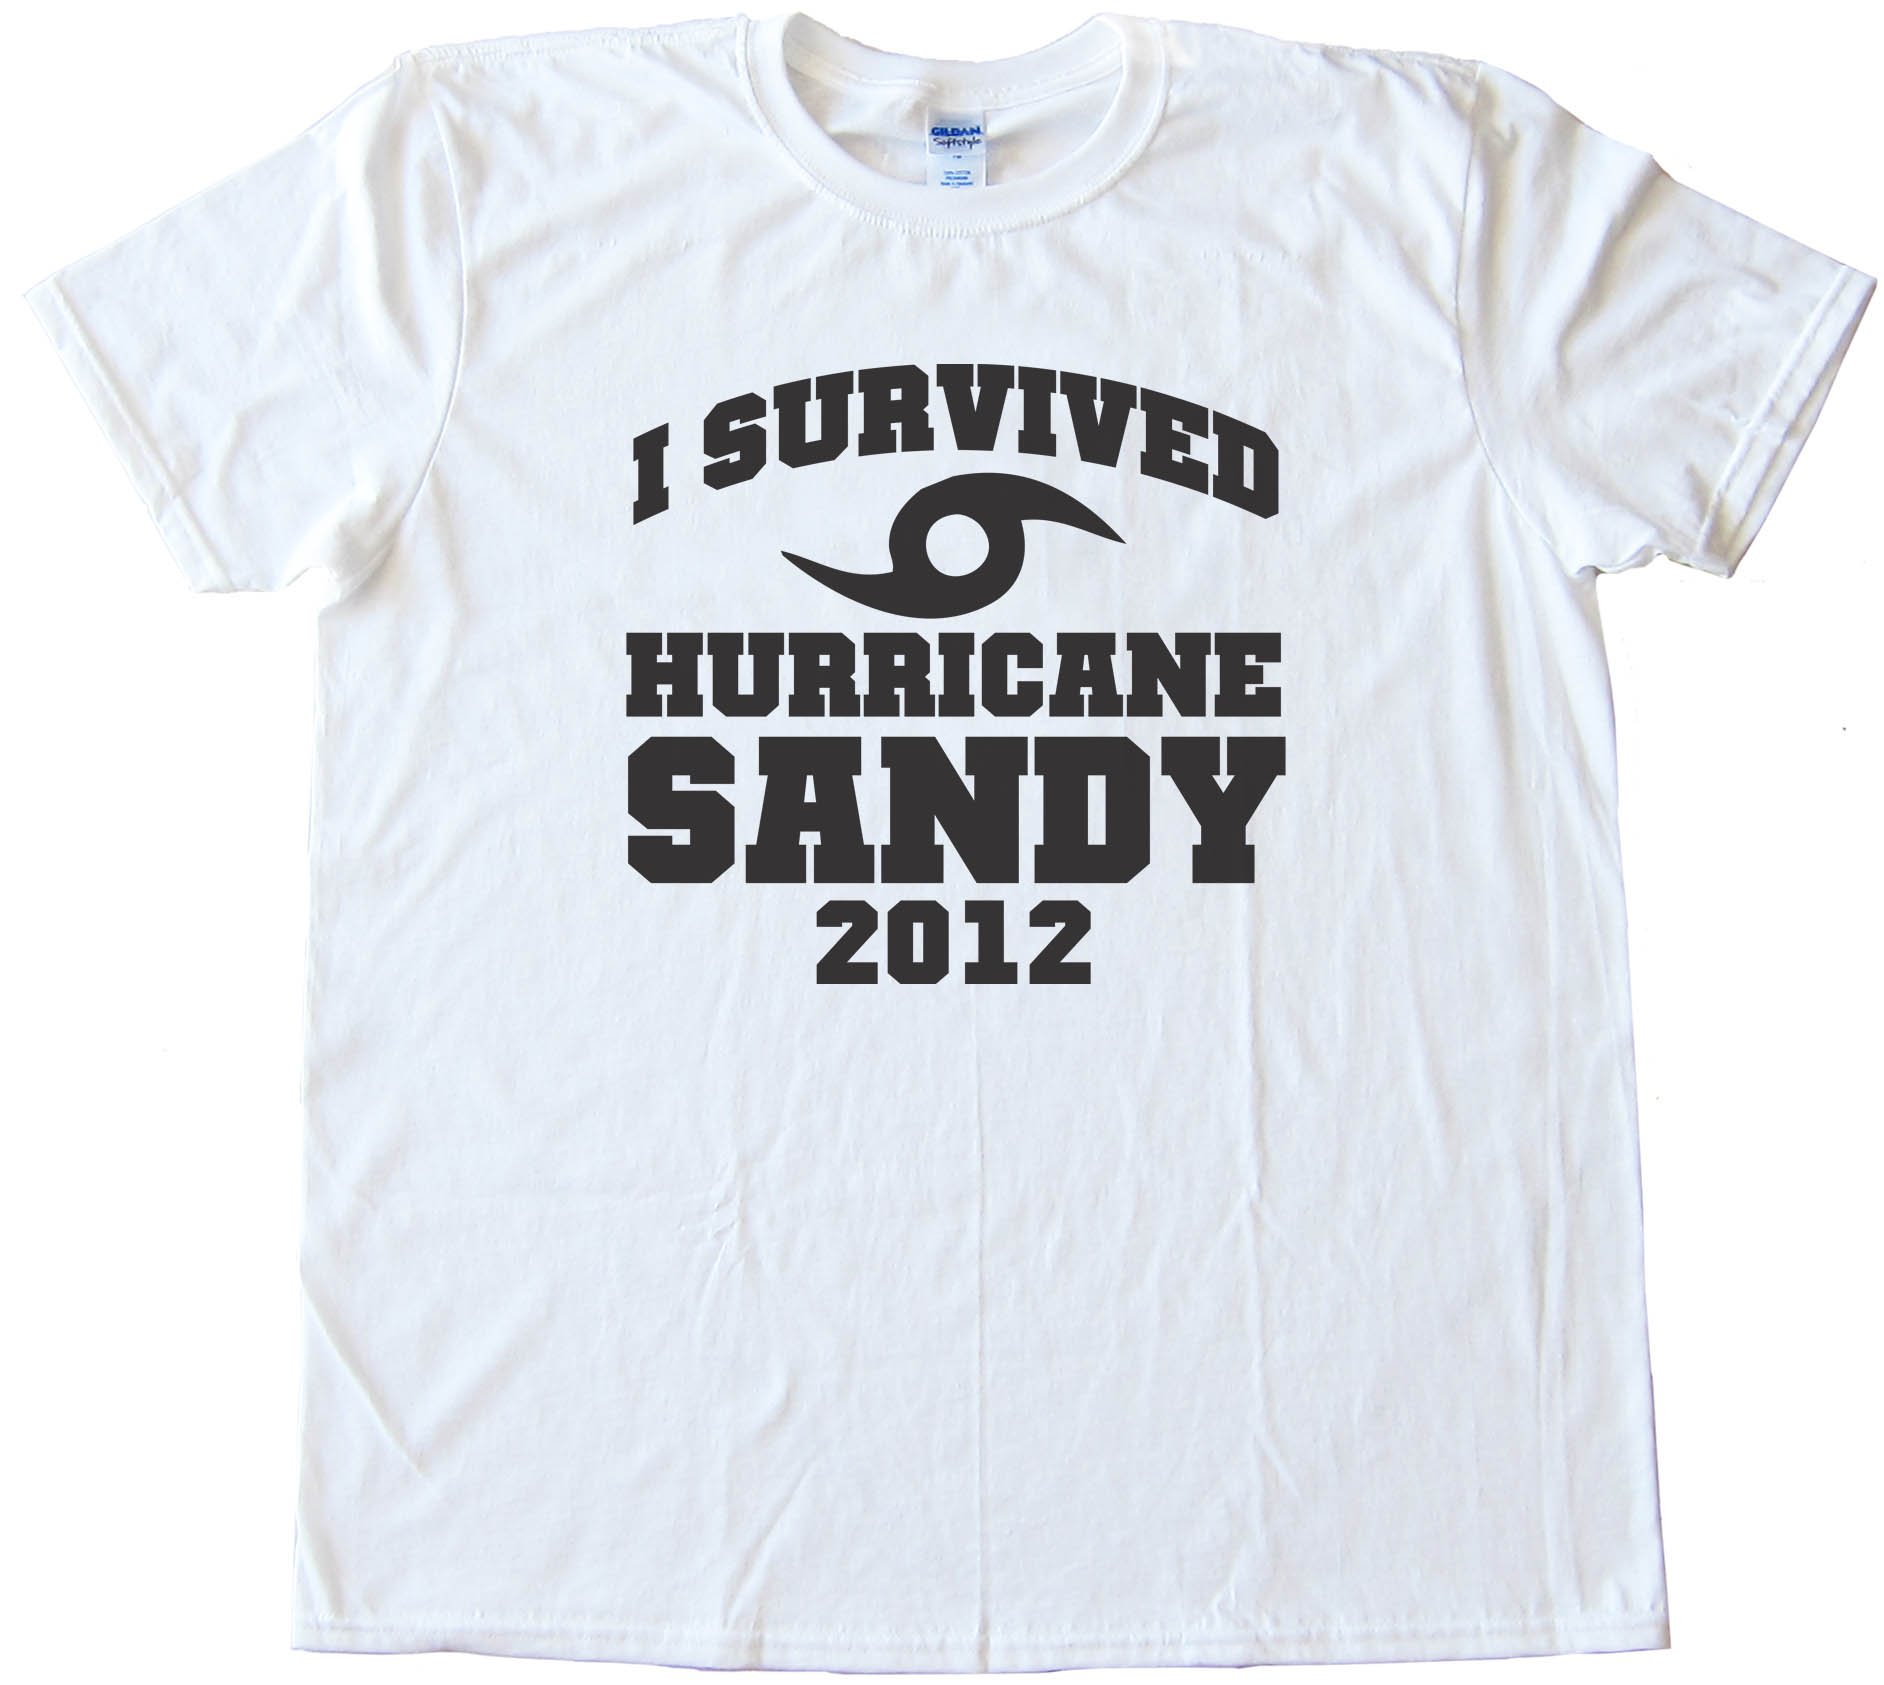 I Survived Hurricane Sandy 2012 - Tee Shirt